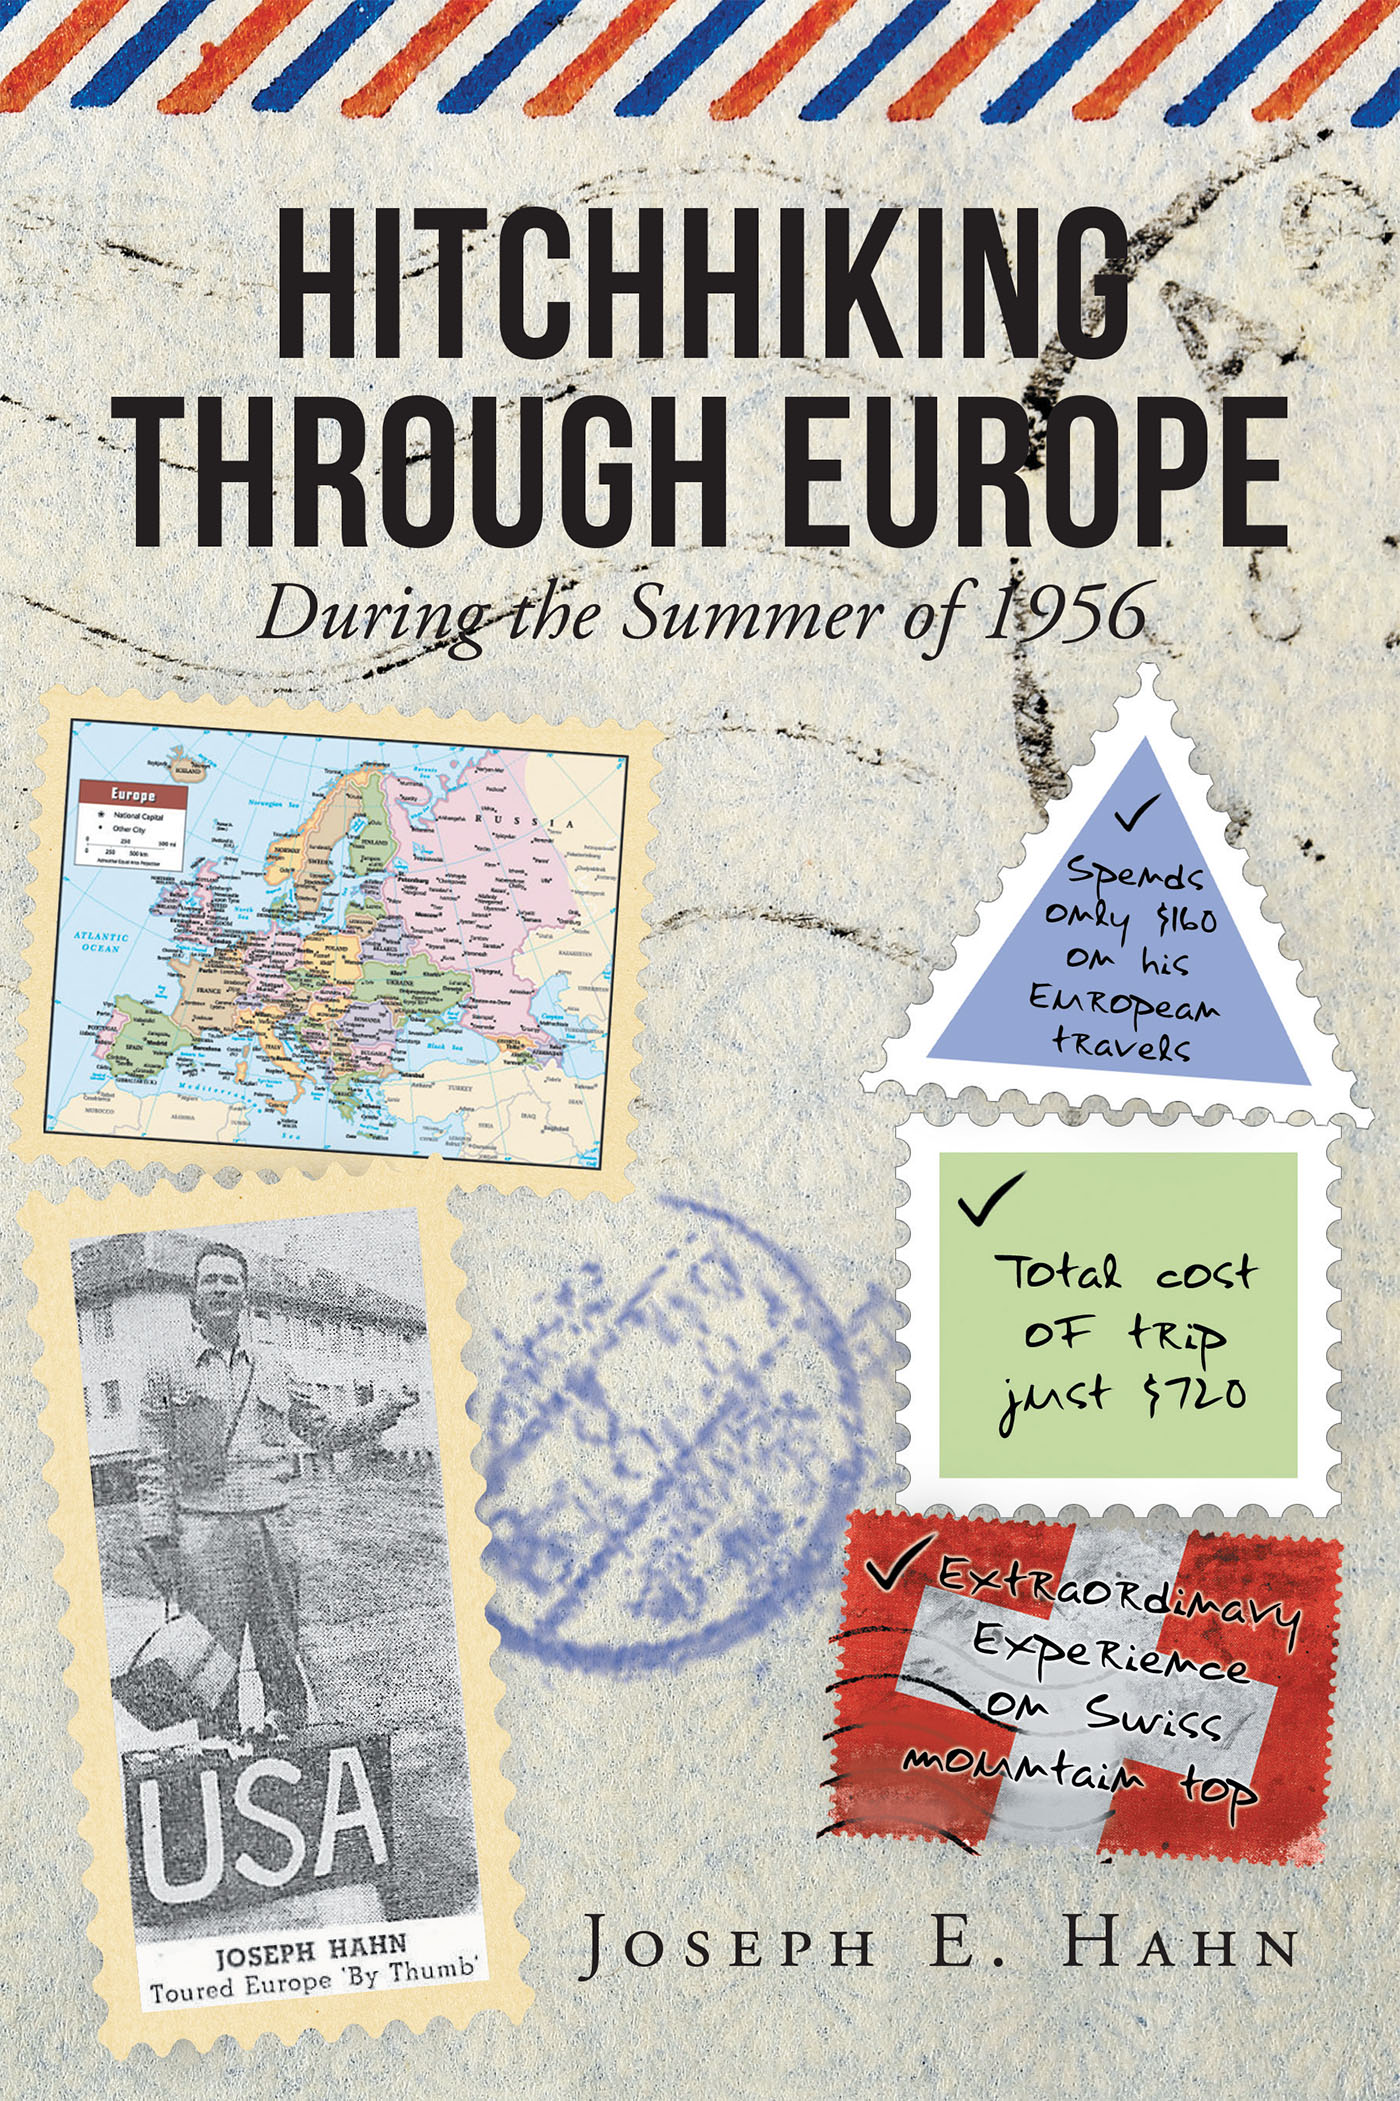 Hitchhiking through Europe Cover Image